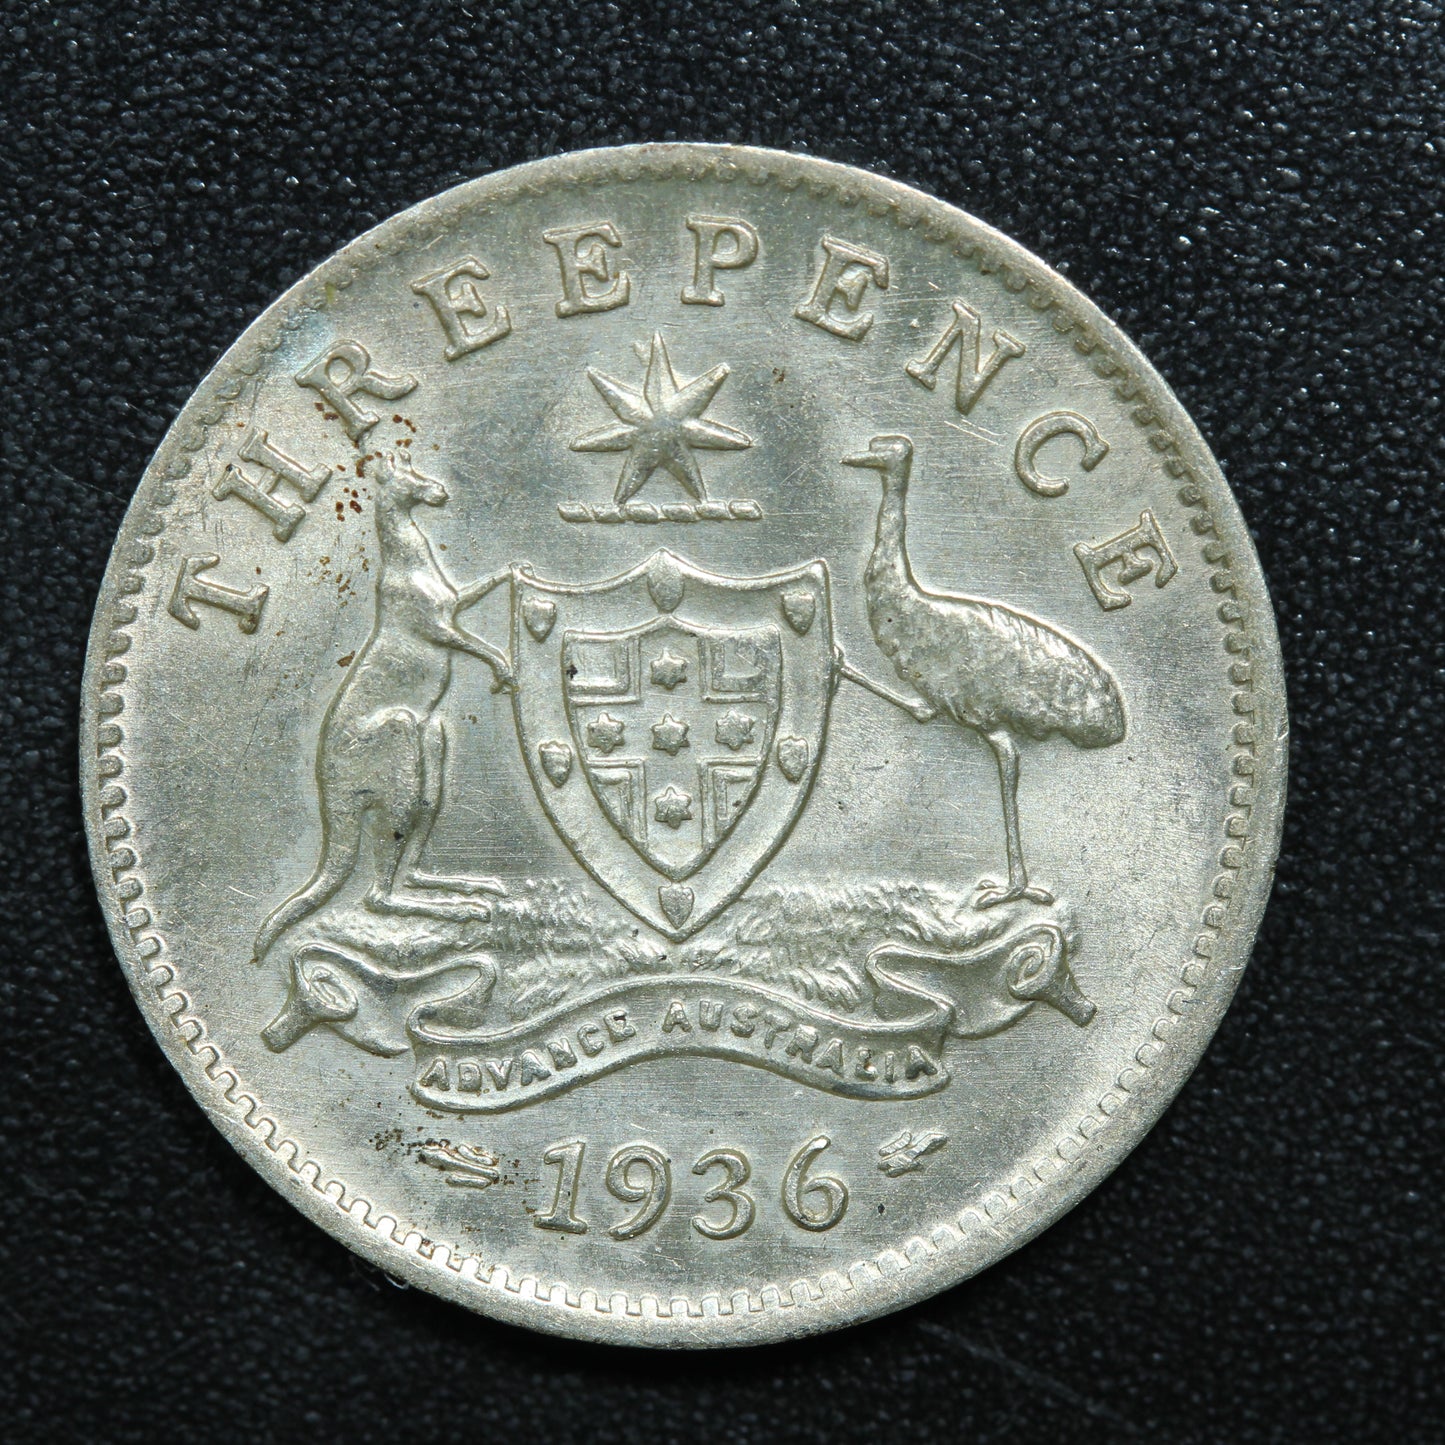 1936 Australian 3 Three Pence Silver Coin - KM# 24